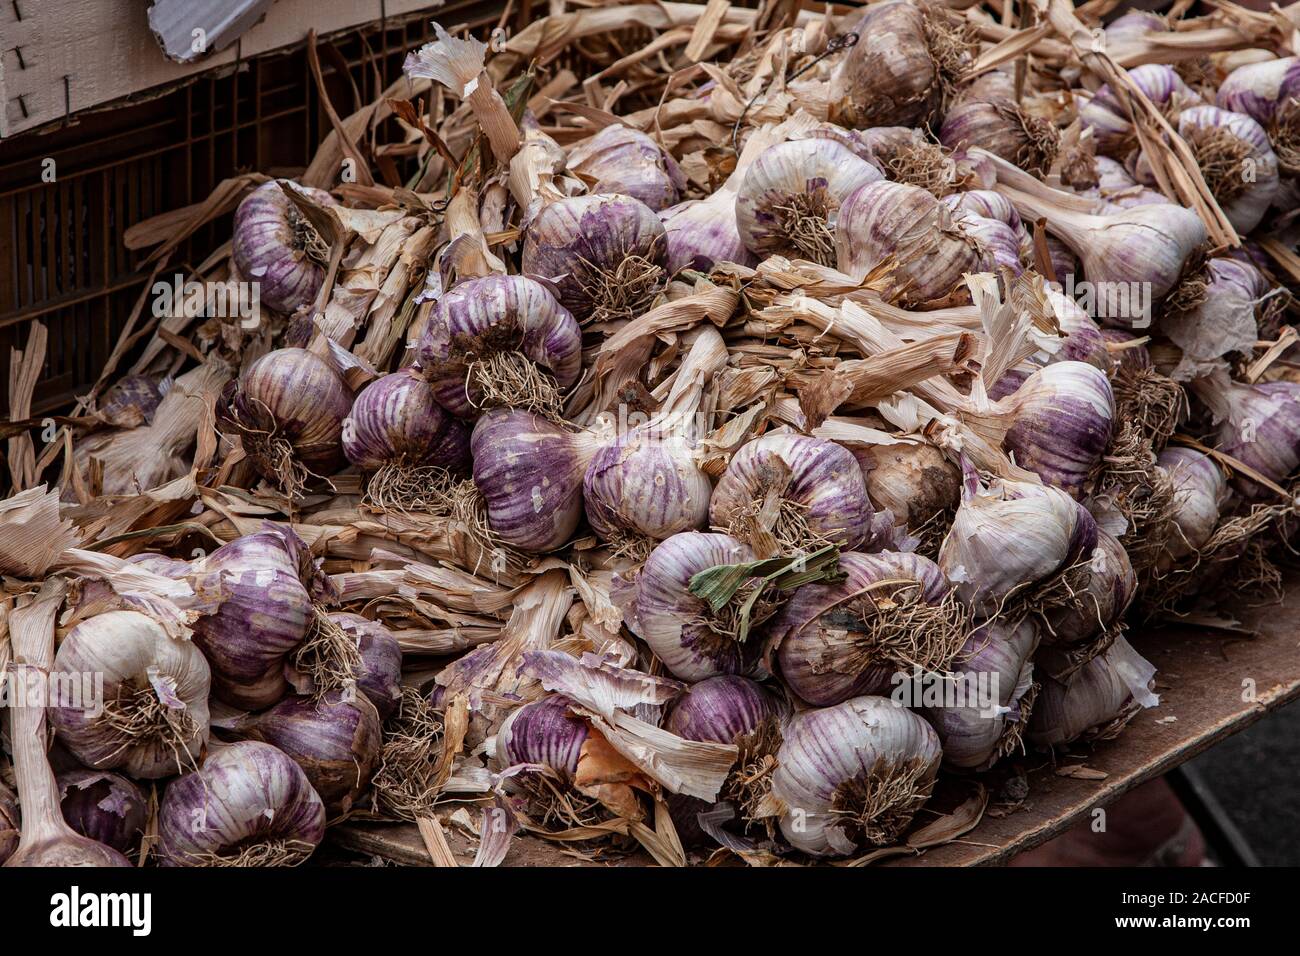 France, Loire region, Forez, Montbrison, street Market, market town, produce, merchants, street markets, market booths, garlic, Stock Photo